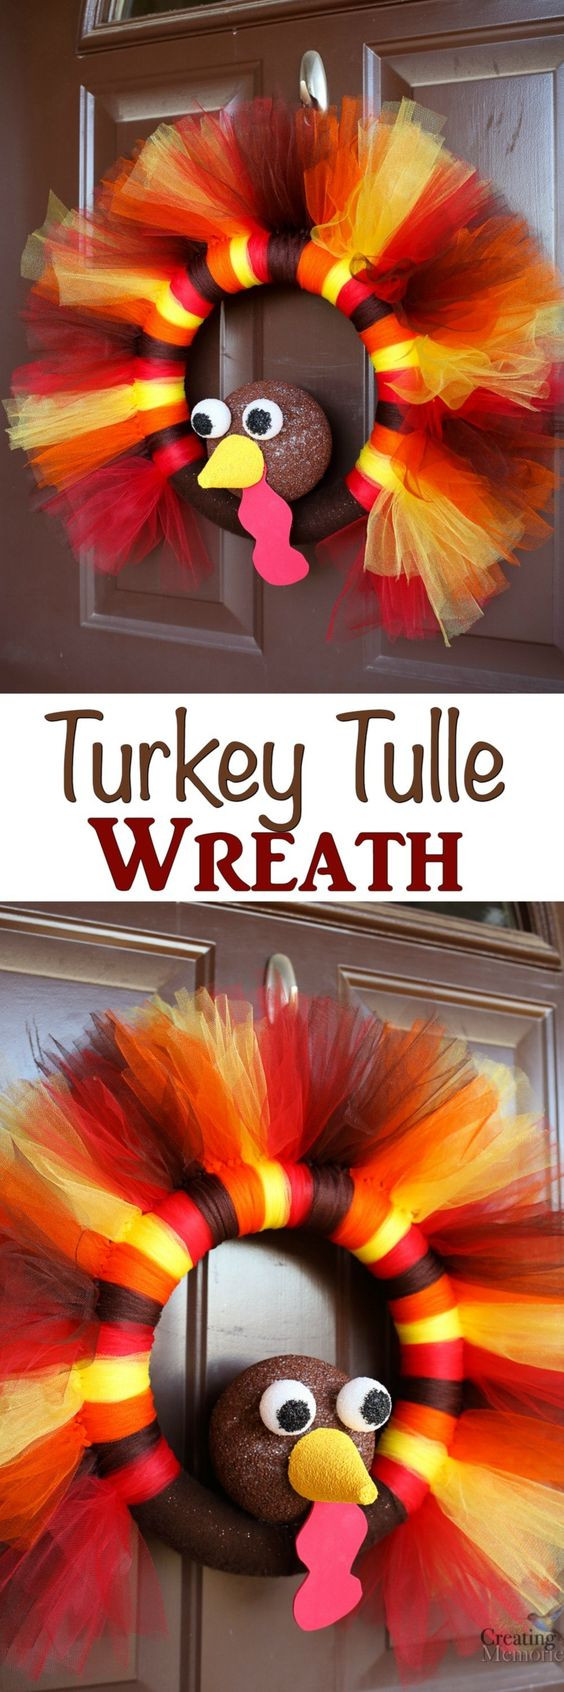 Turkey Decorations For Thanksgiving
 30 Easy DIY Thanksgiving Door Decorations 2017